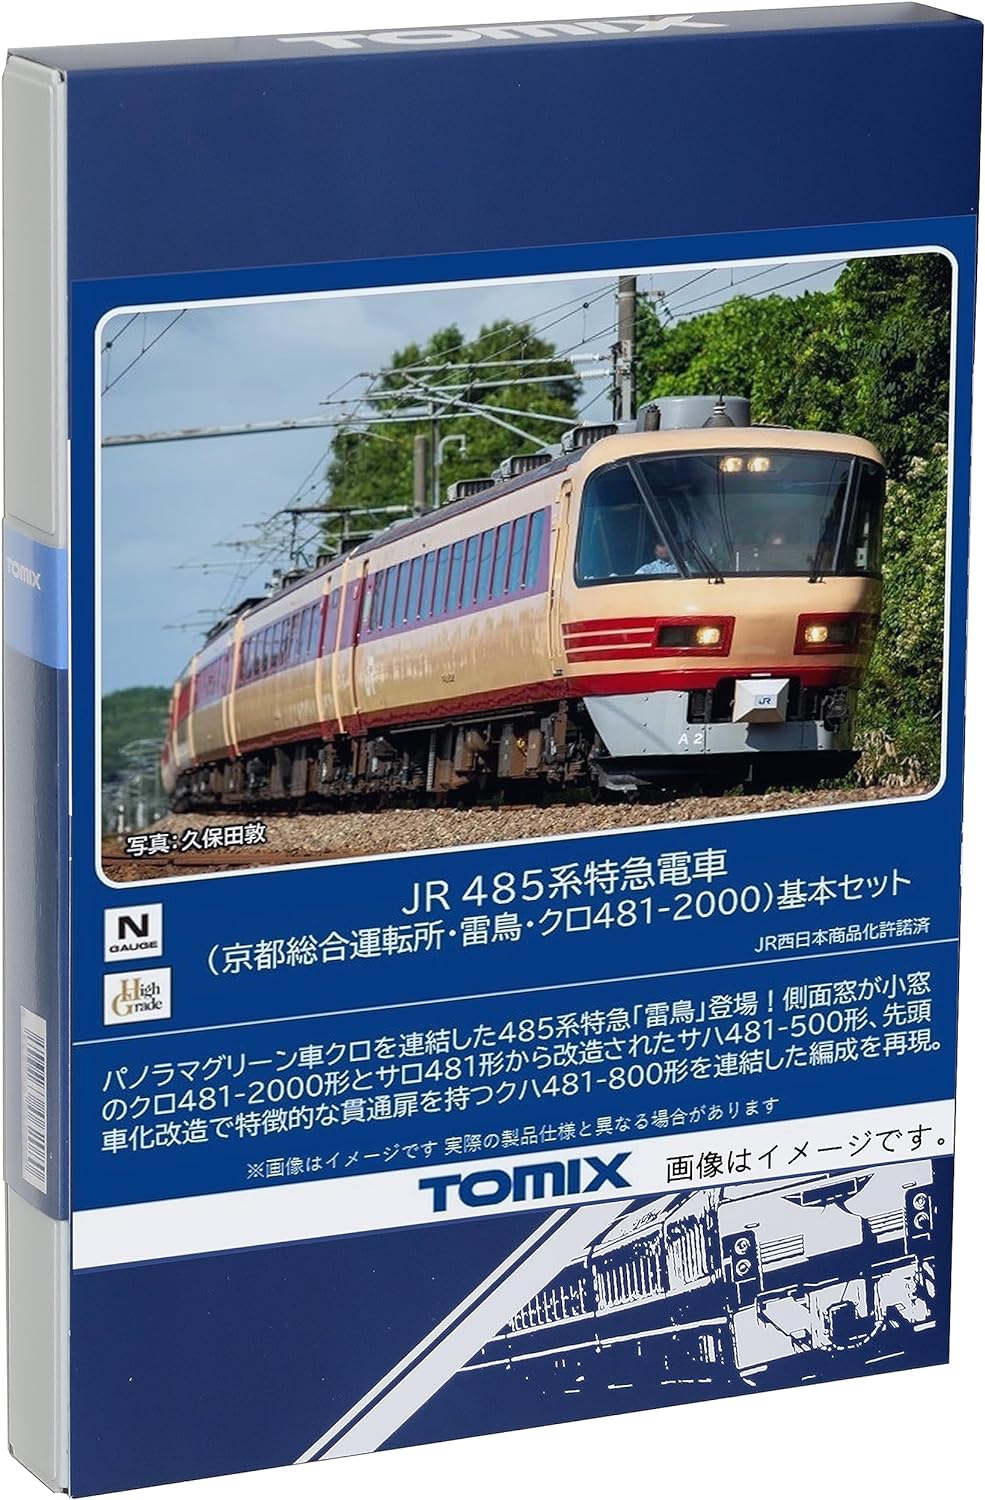 TOMIX 98549 N Gauge JR 485 Series Kyoto General Driving Center Raicho Extension Set Railway Model Train - BanzaiHobby